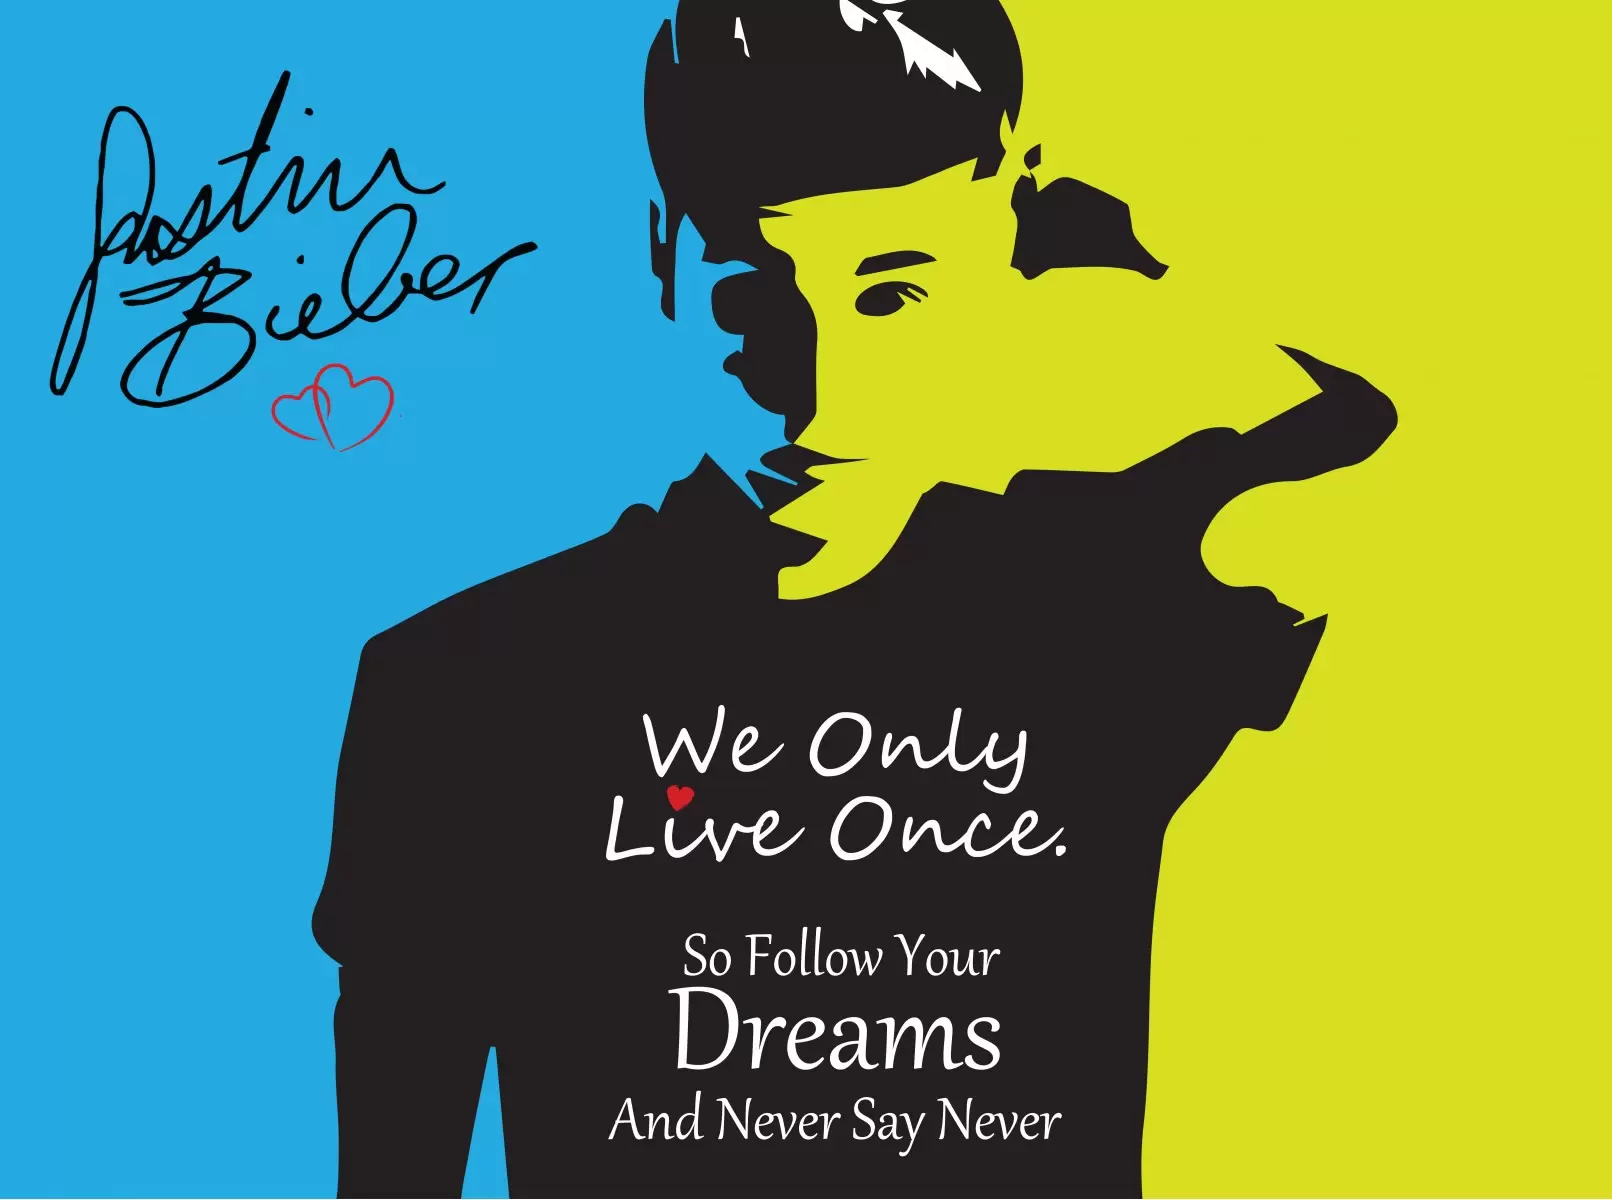 Justin Bieber Quotes - מסגרת עיצובים - תמונות לחדר שינה נוער טיפוגרפיה דקורטיבית  - מק''ט: 240831